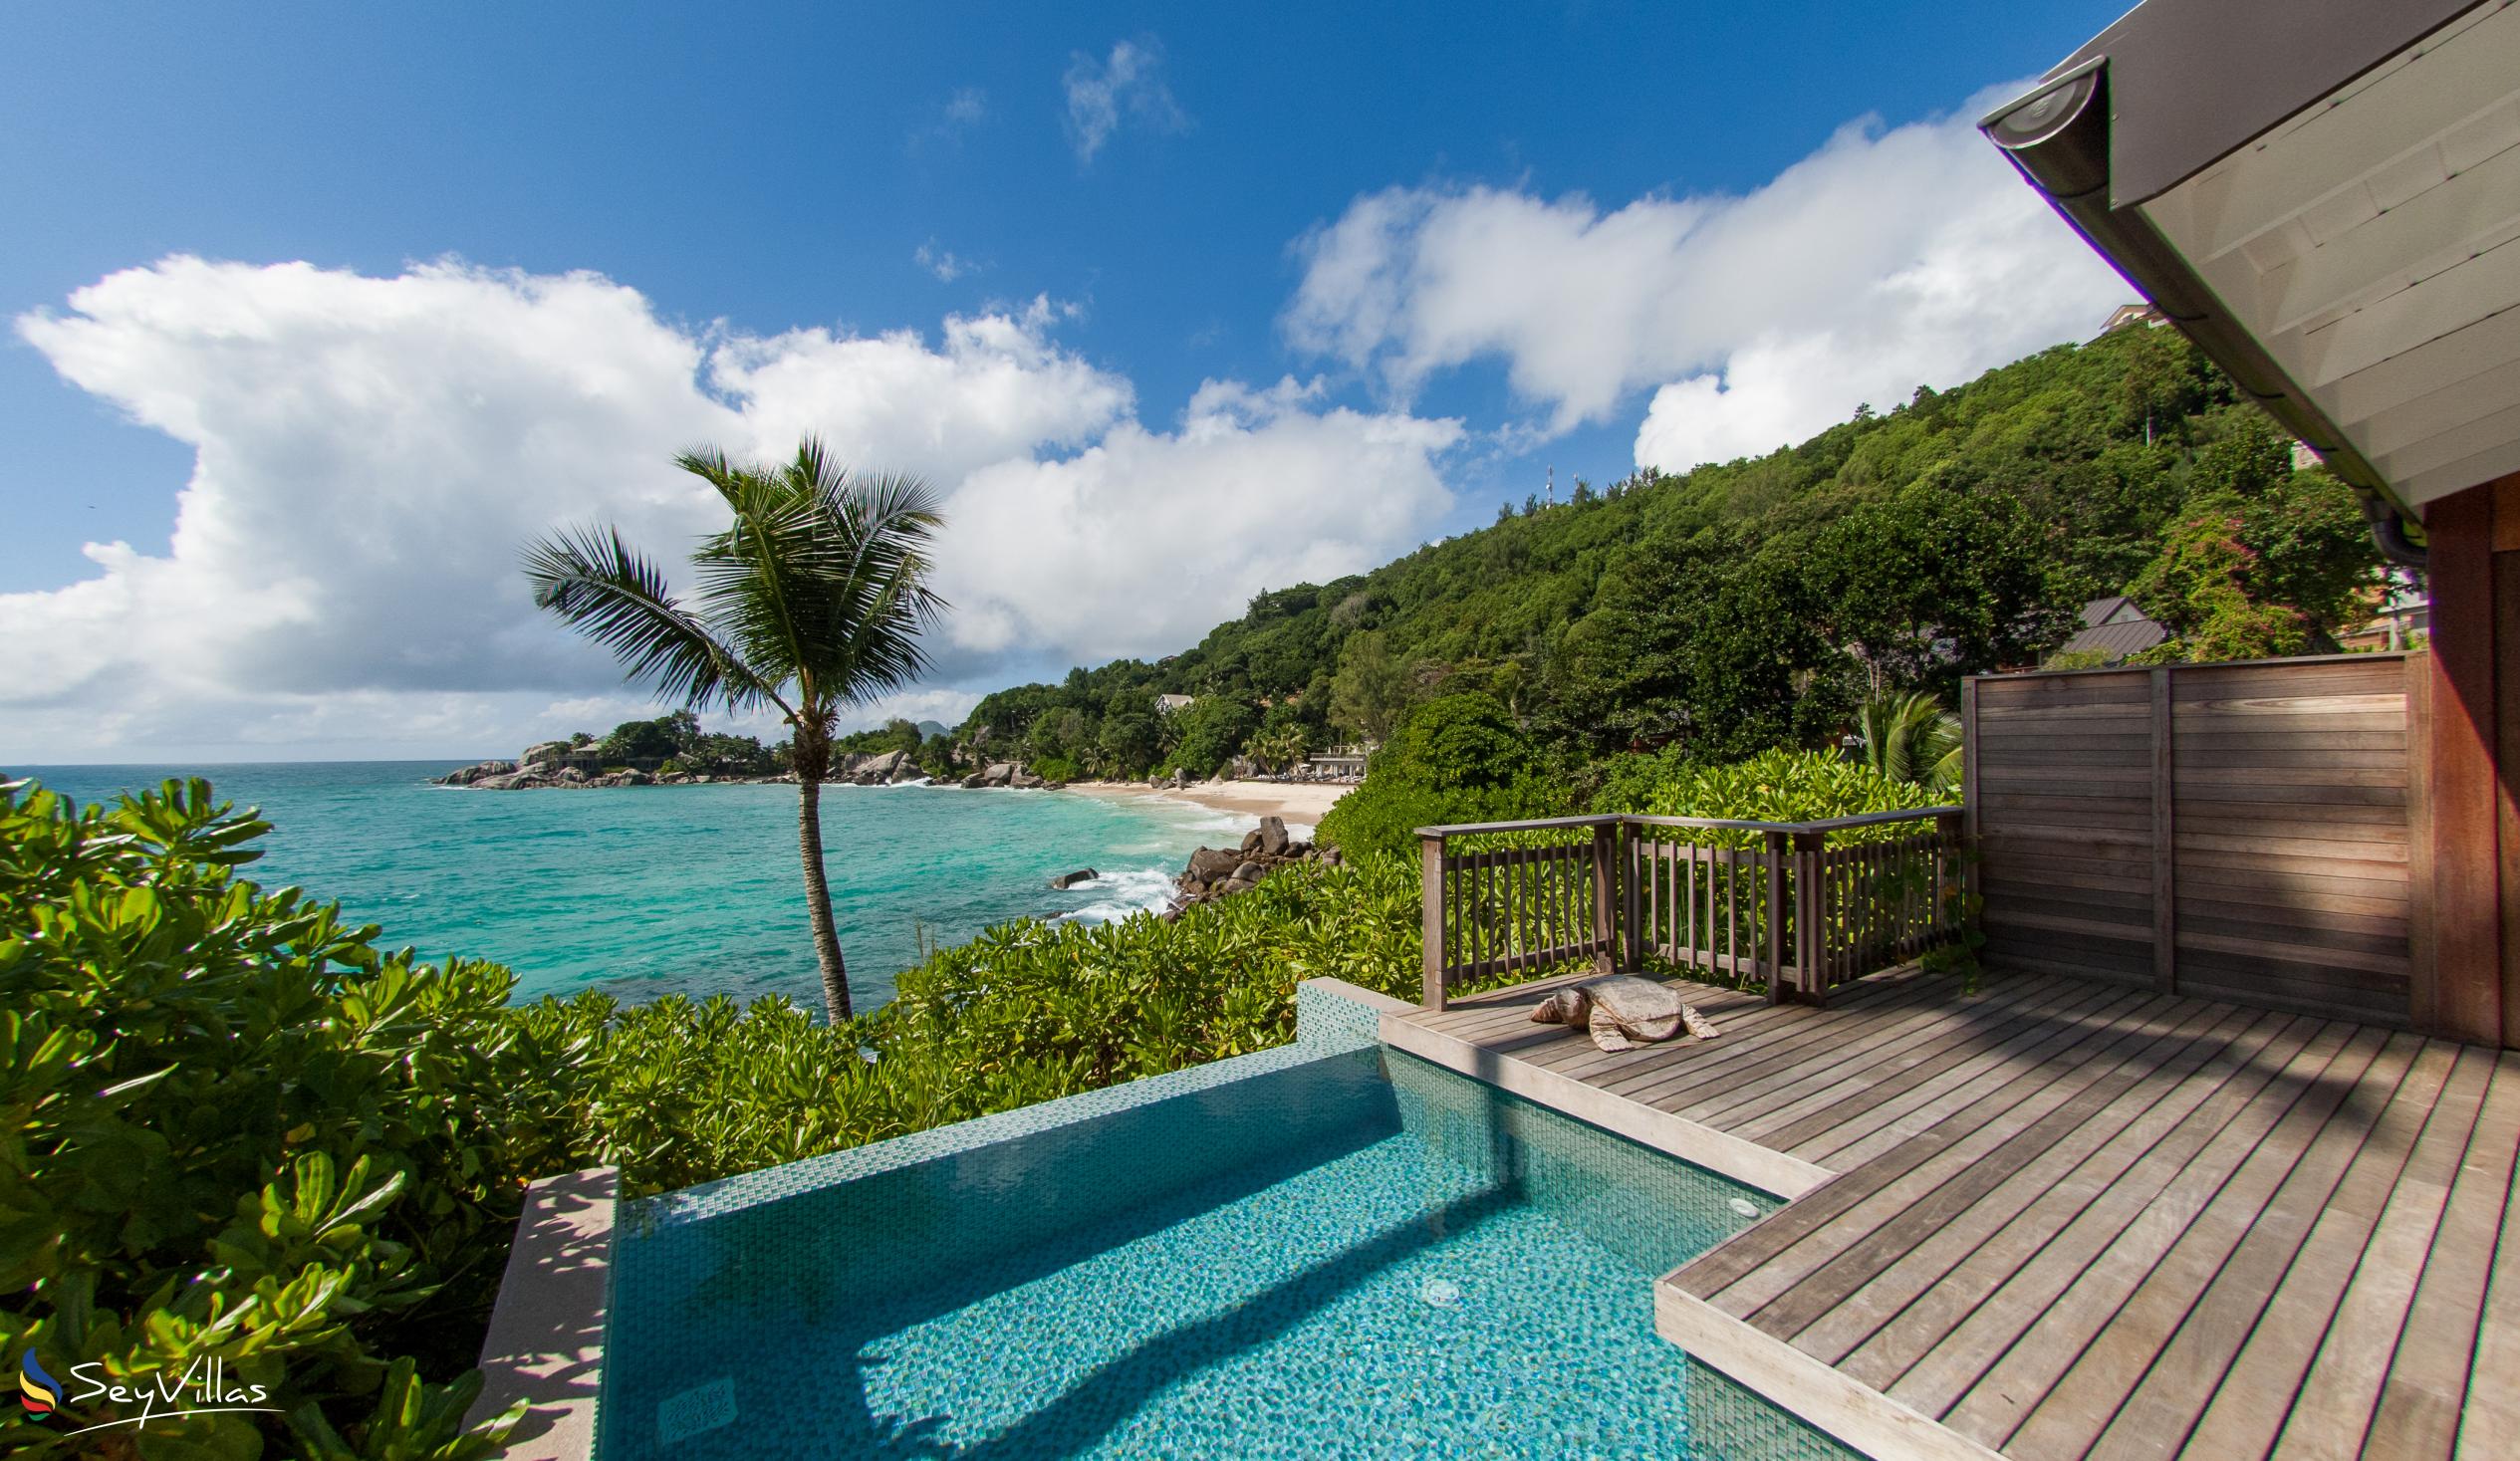 Foto 89: Carana Beach Hotel - Chalet vista mare e con piscina - Mahé (Seychelles)